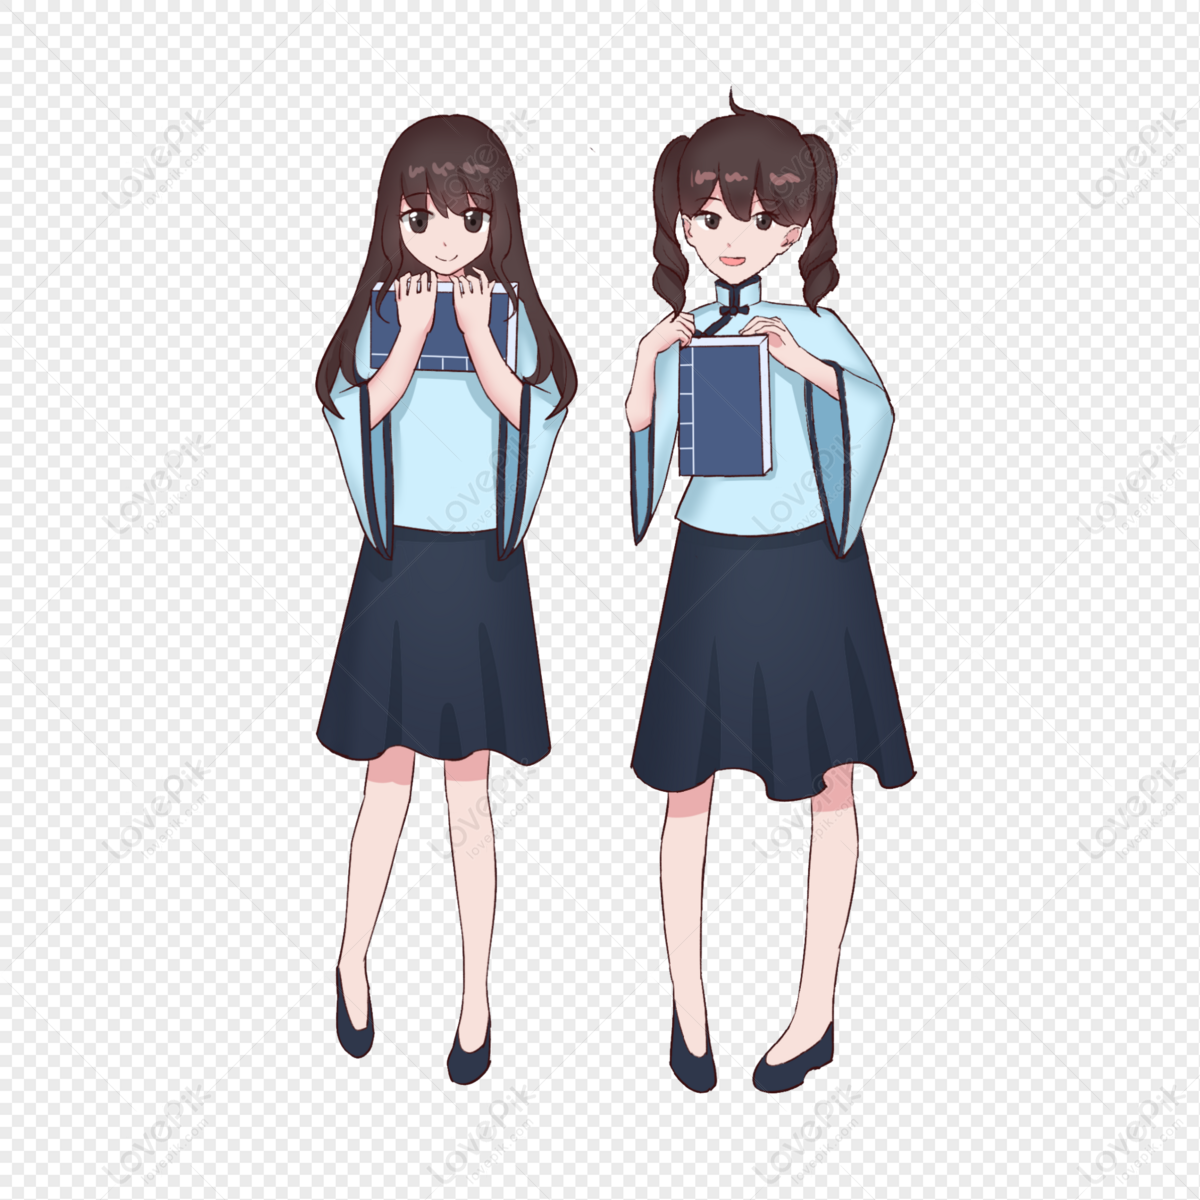 Ảnh Anime đẹp ( 1 ) - Học sinh boy + girl - Wattpad